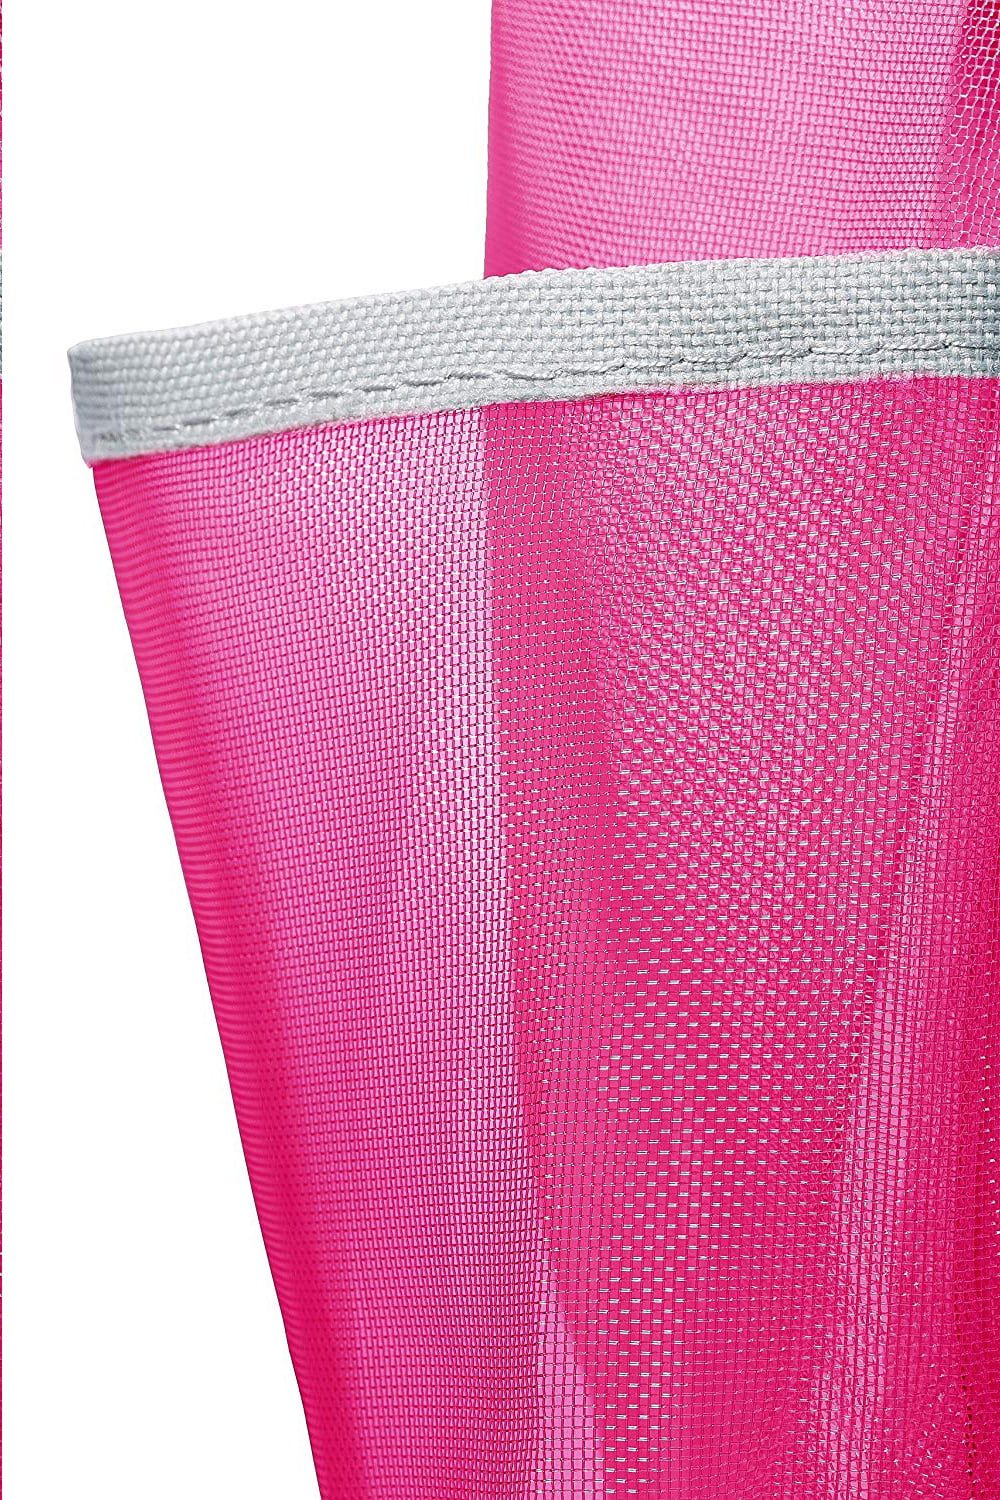 7-Pocket Pearl Blush Pink Shower Caddy